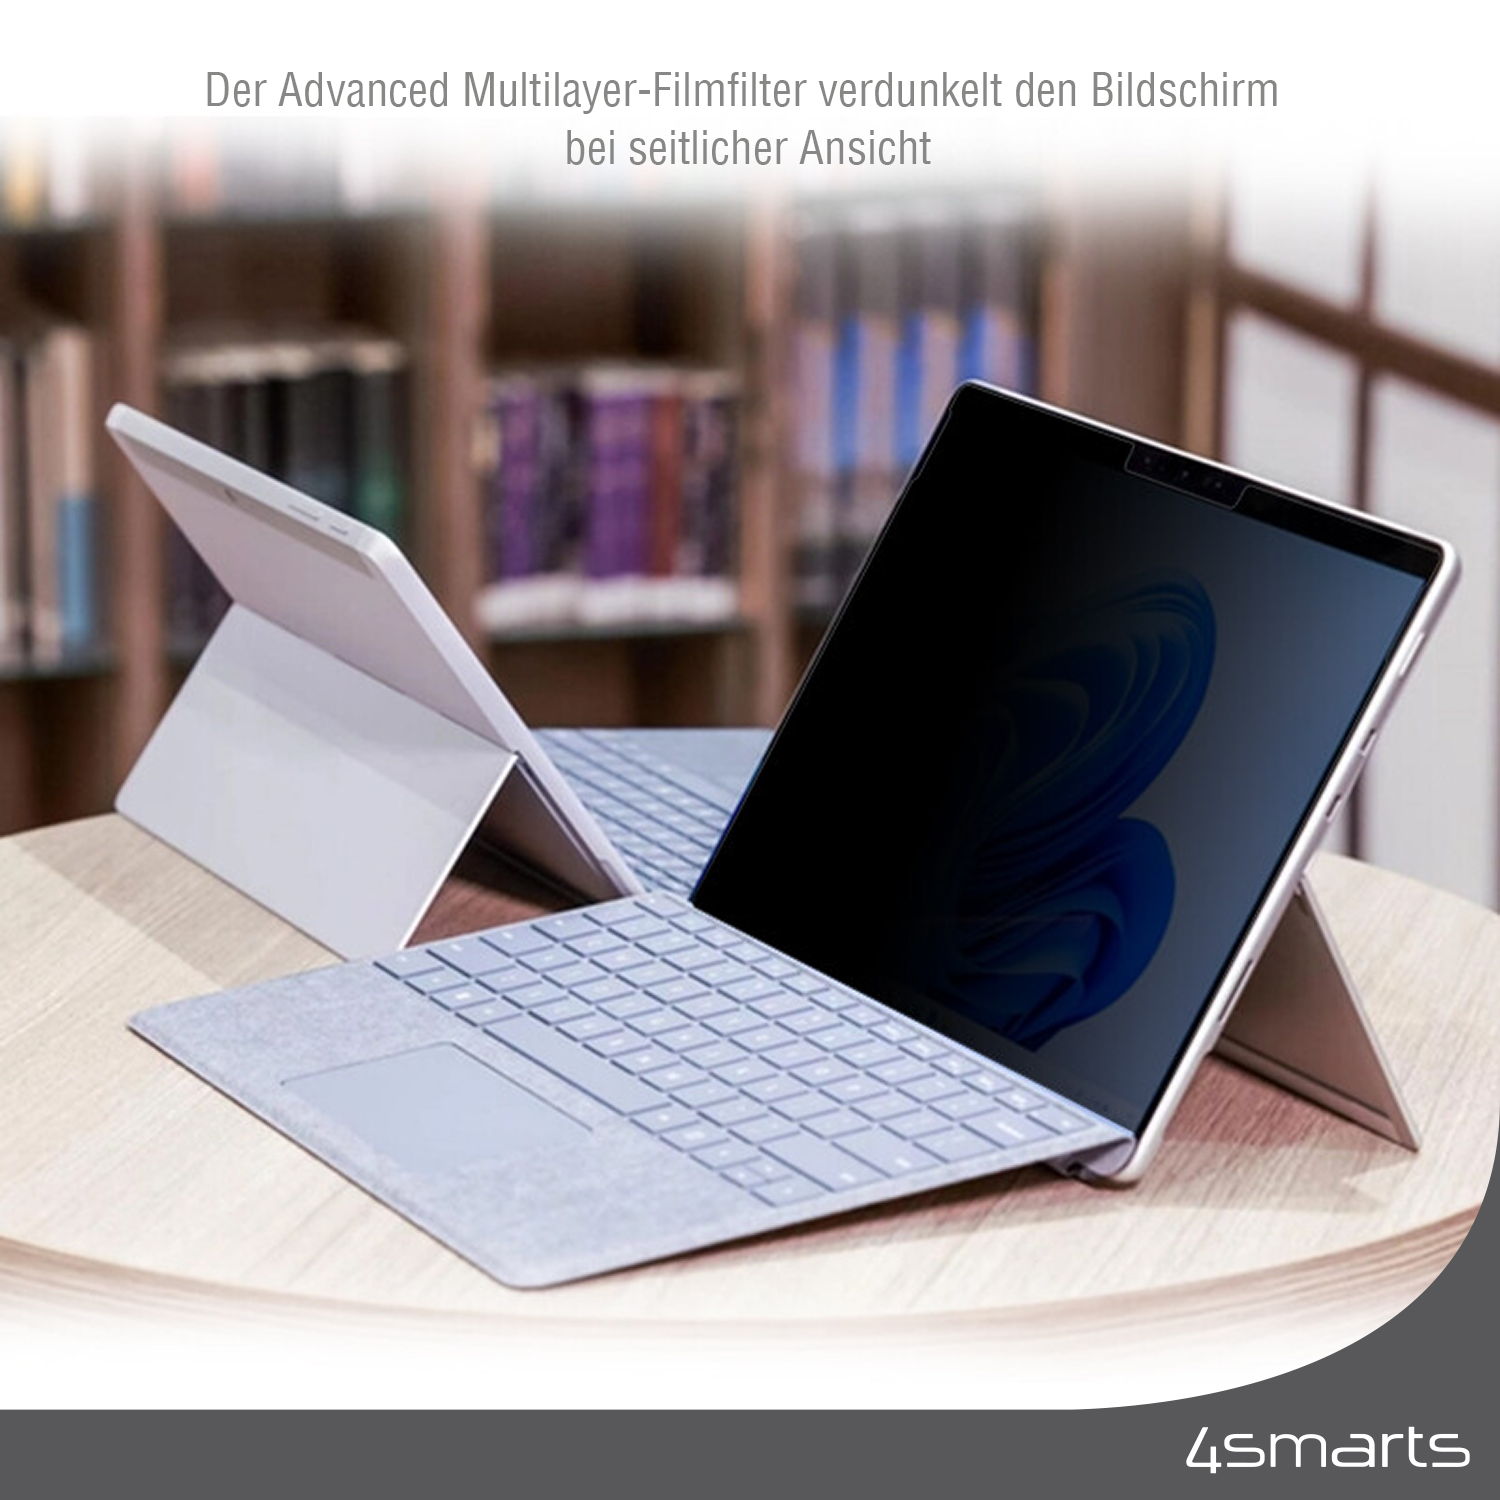 4SMARTS Smartprotect Privacy Filter Displayschutzfolie(für Microsoft Pro Surface 7+)